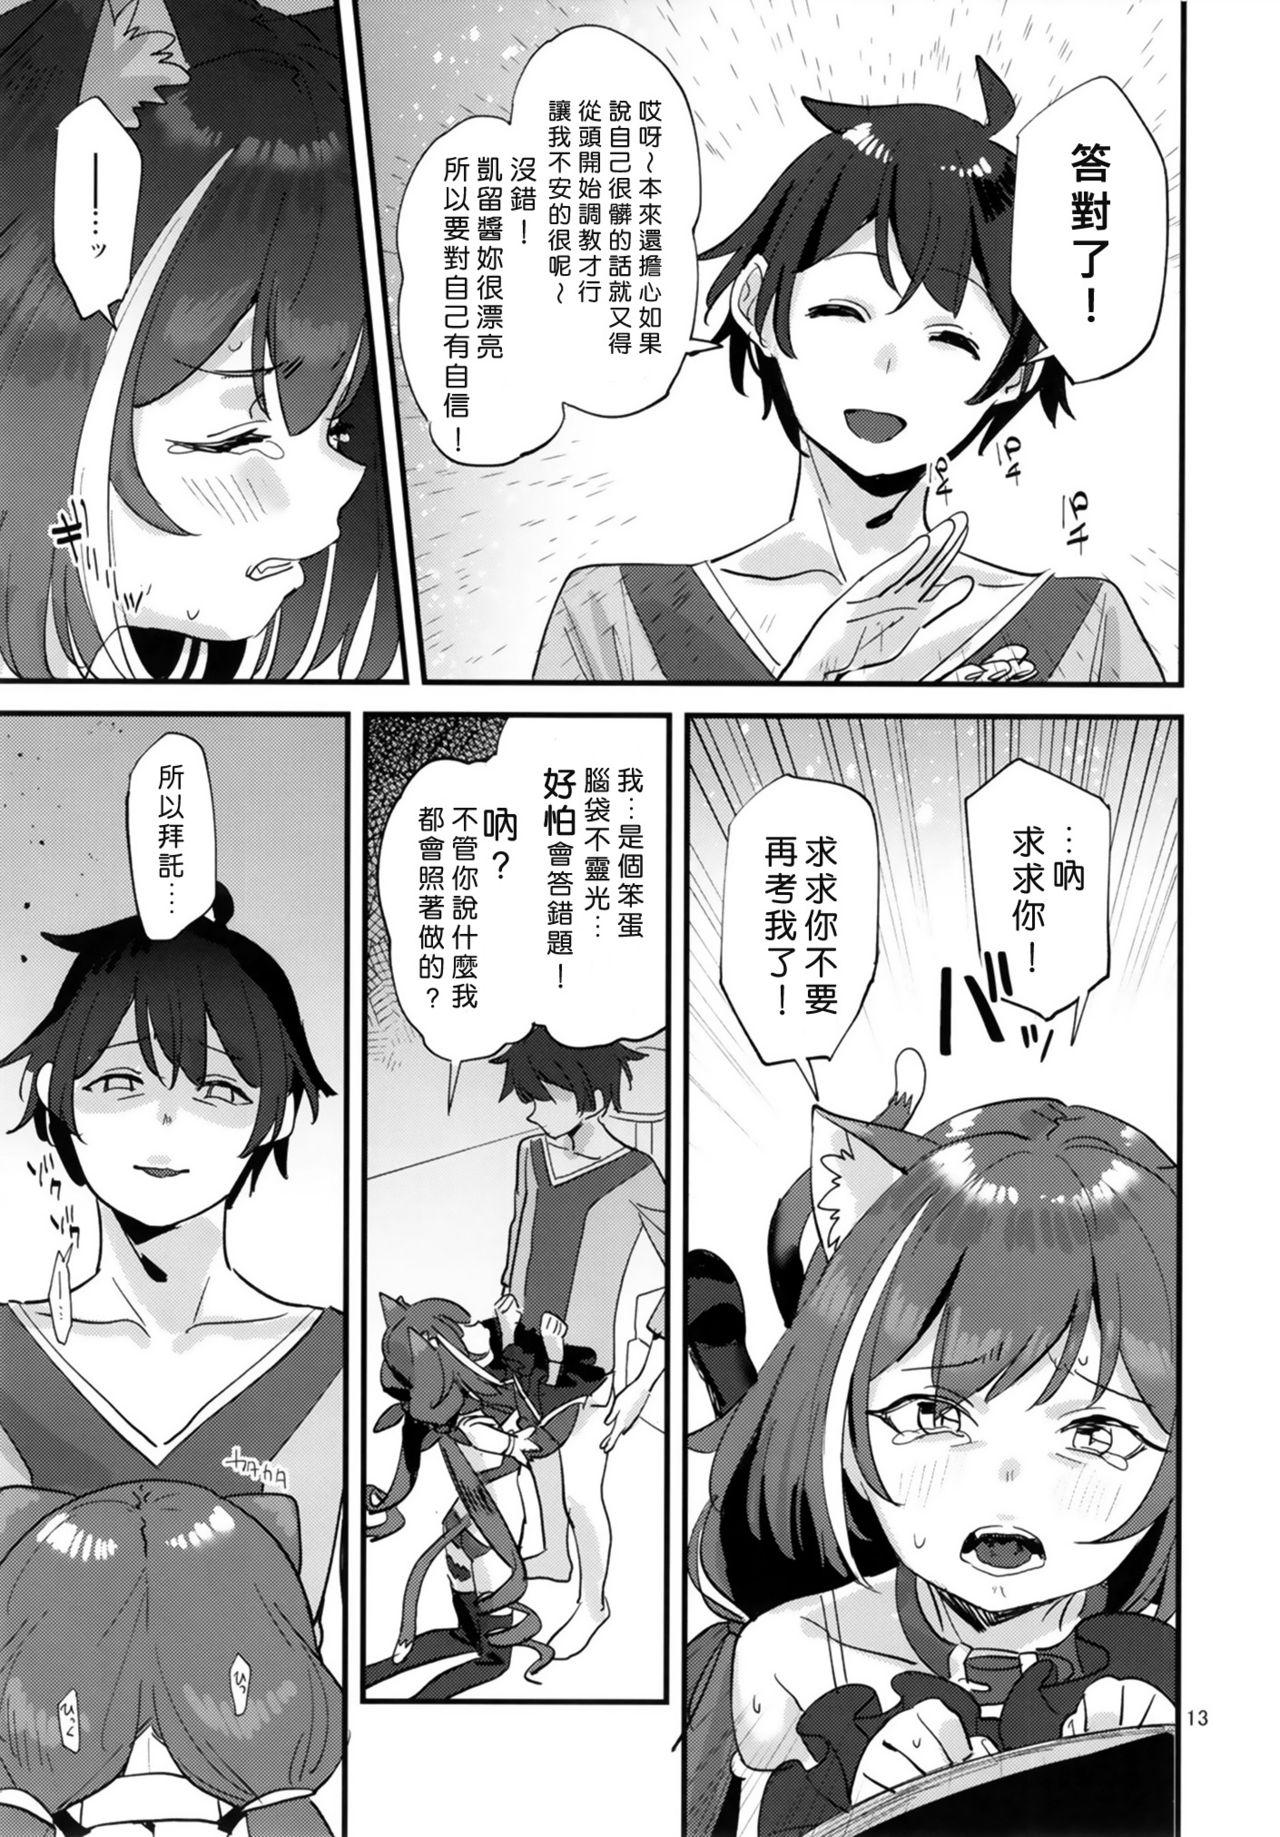 Behind Ohayou, Kyaru-chan - Princess connect Affair - Page 13